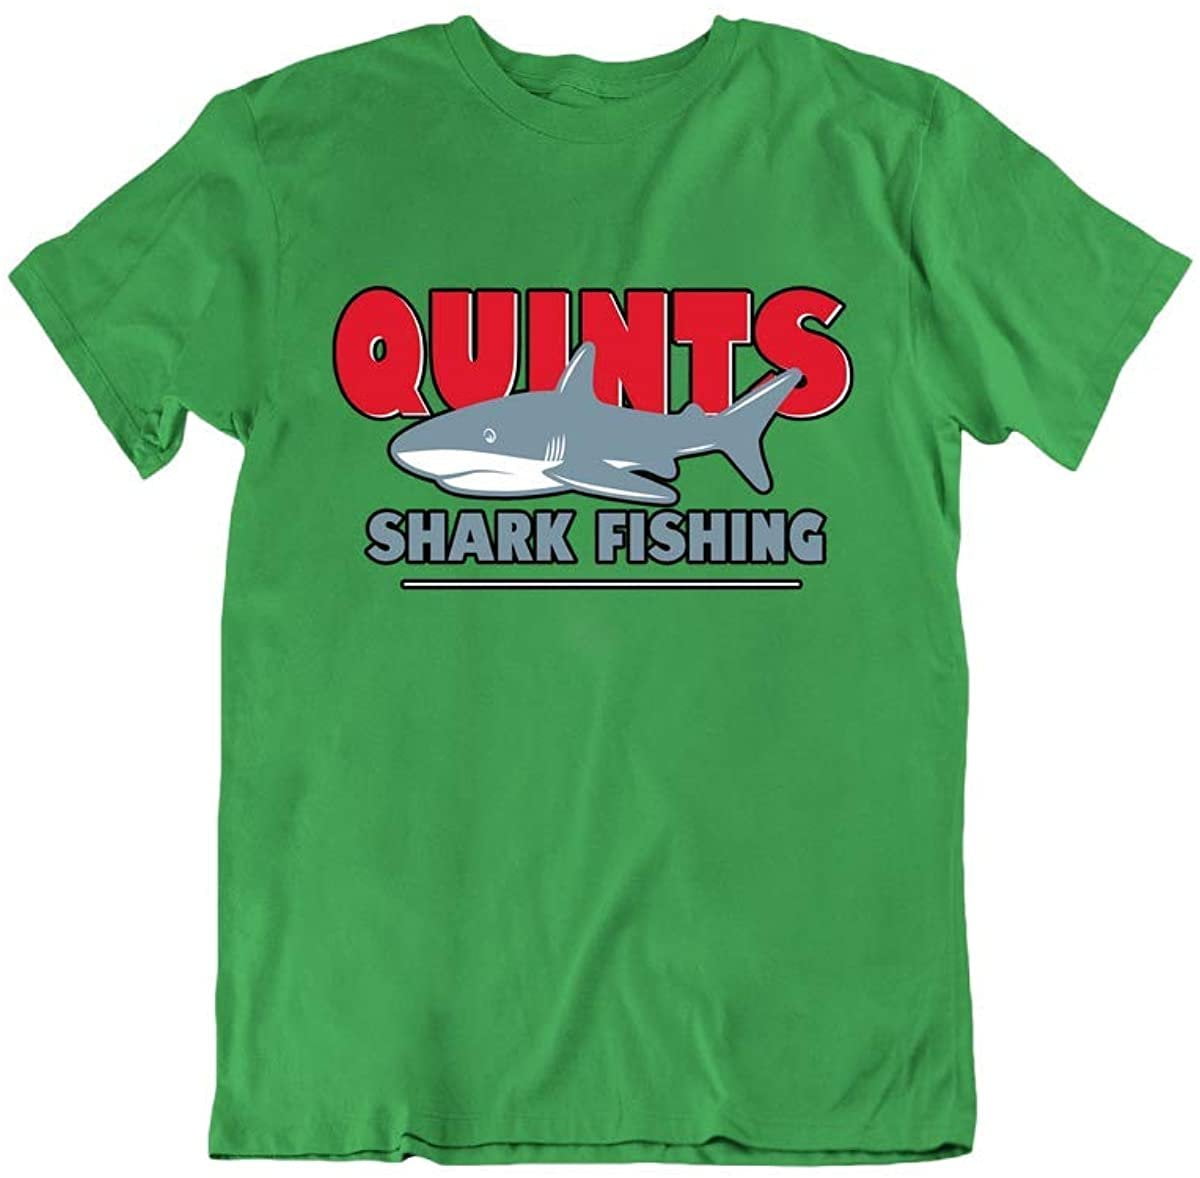 Quints Shark Fishing Funny Novelty Humor Fashion Design Cotton T-Shirt Red  